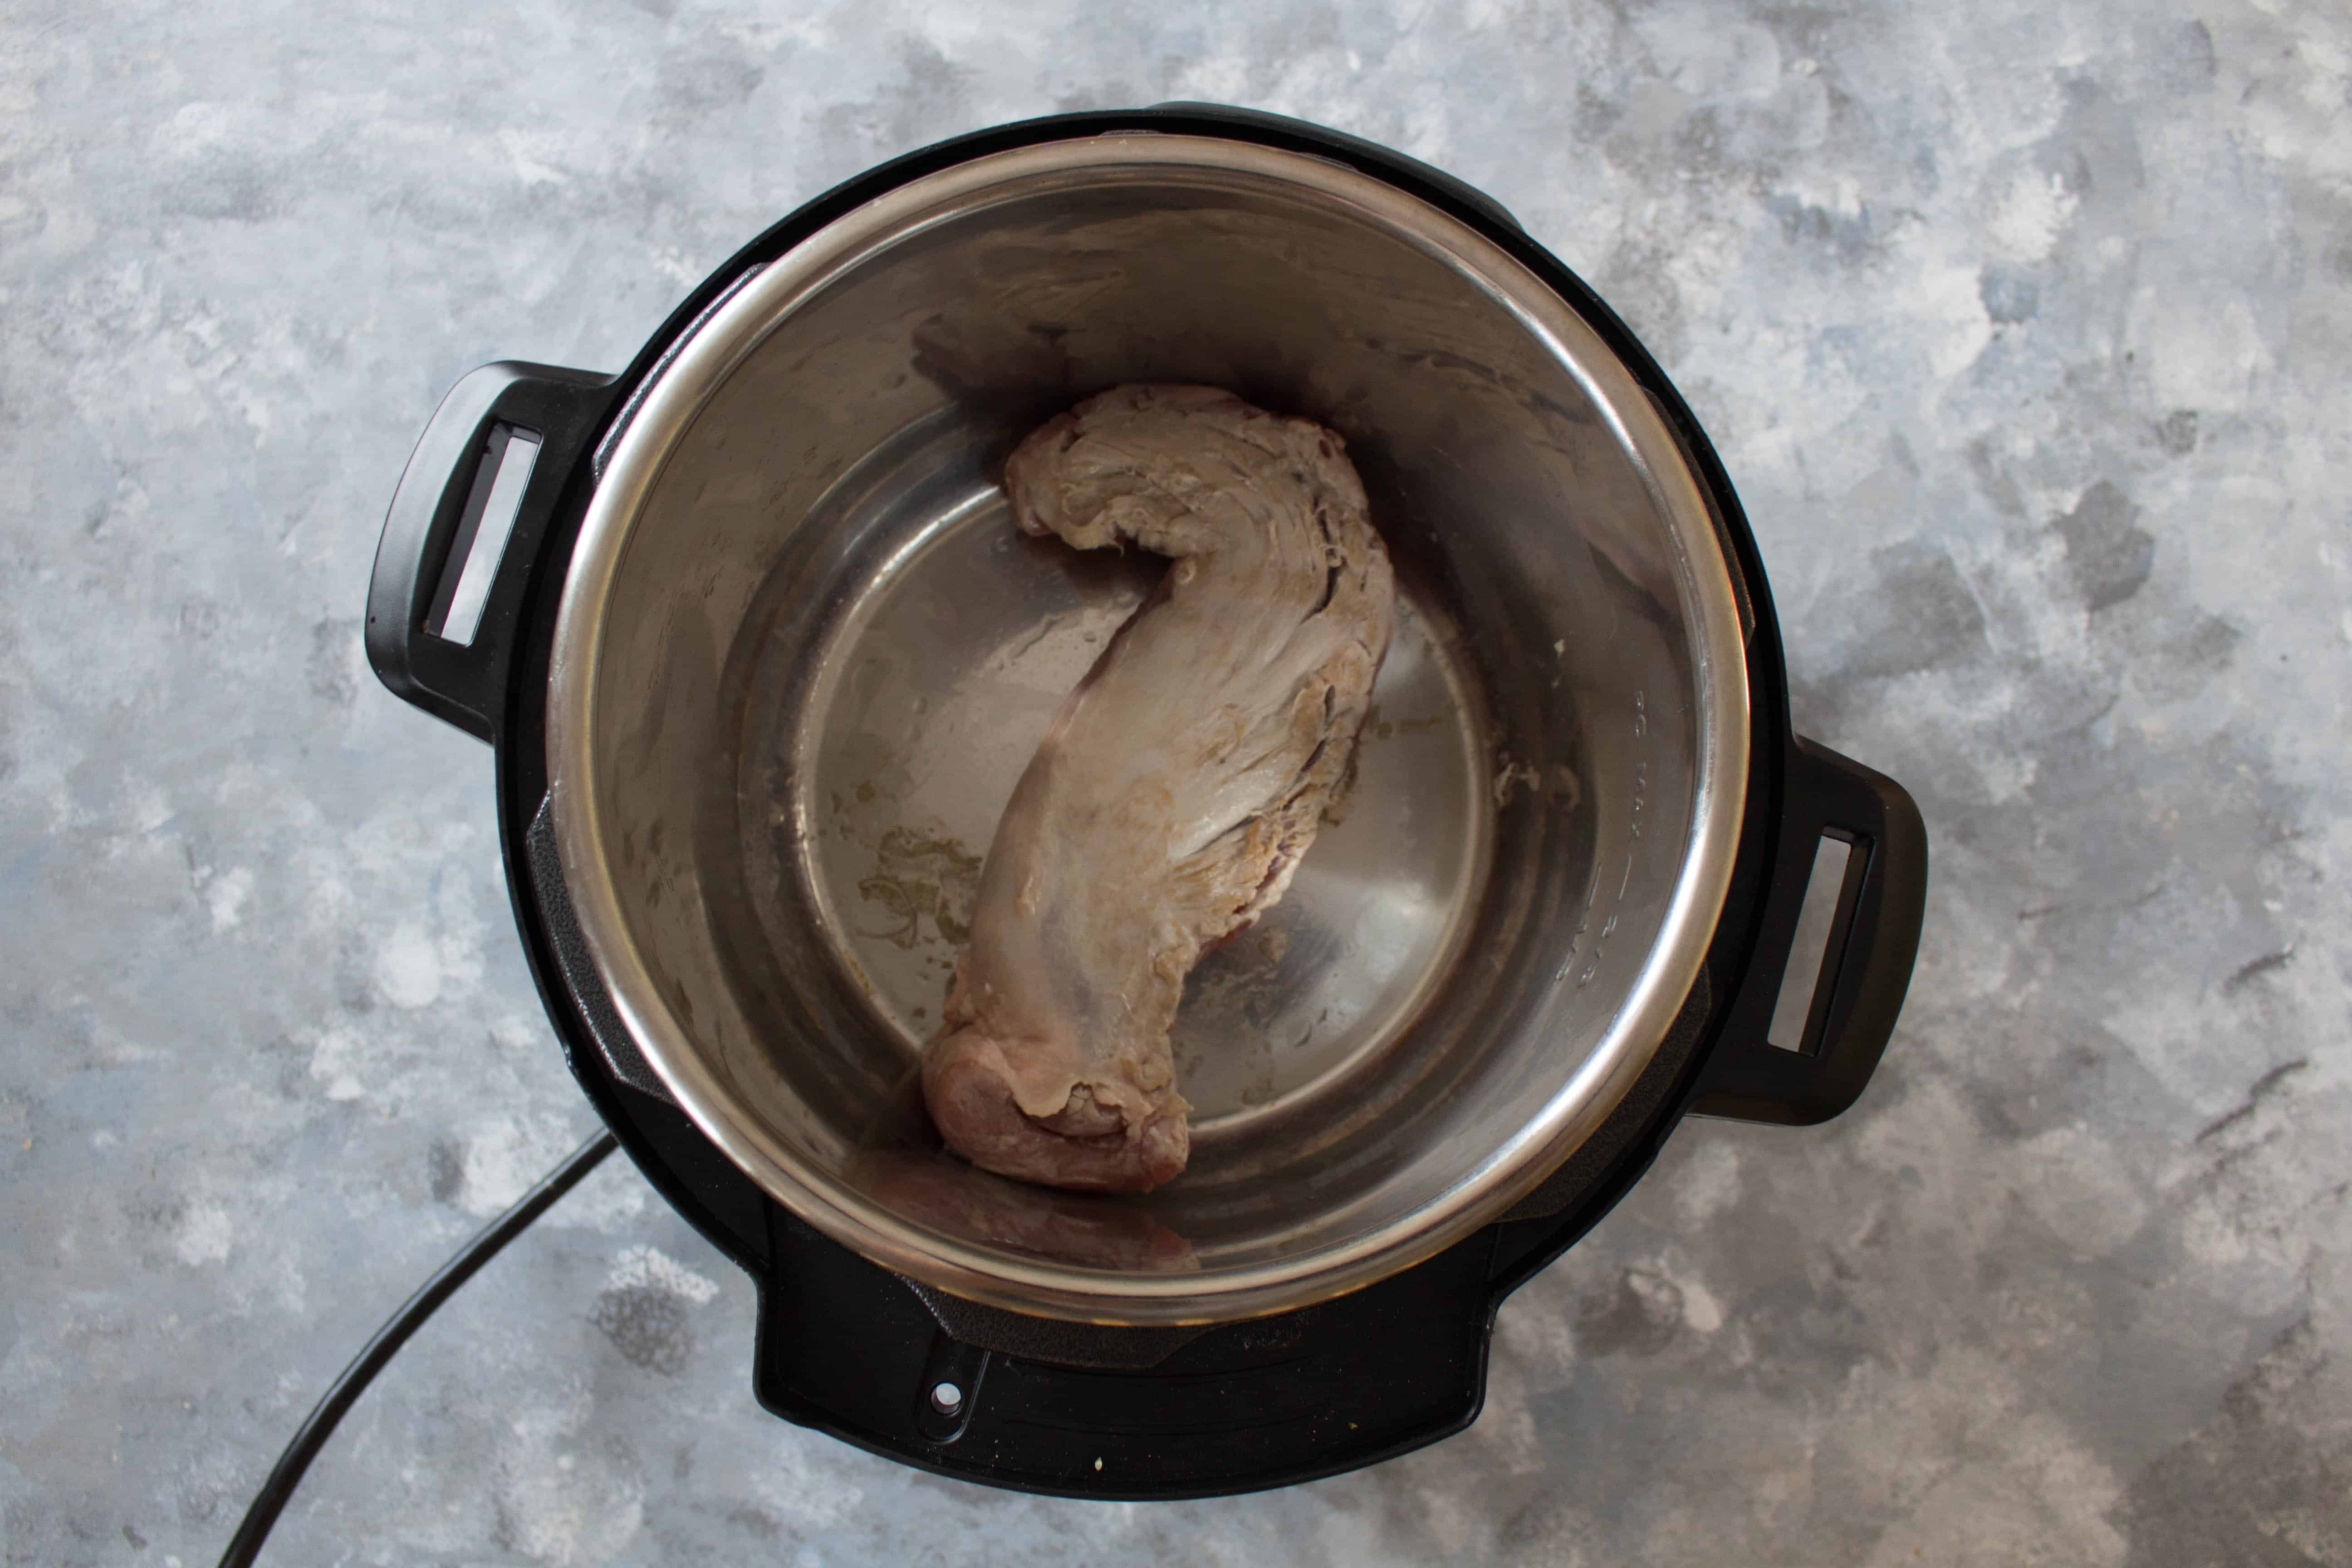 browning the pork tenderloin in the instant pot